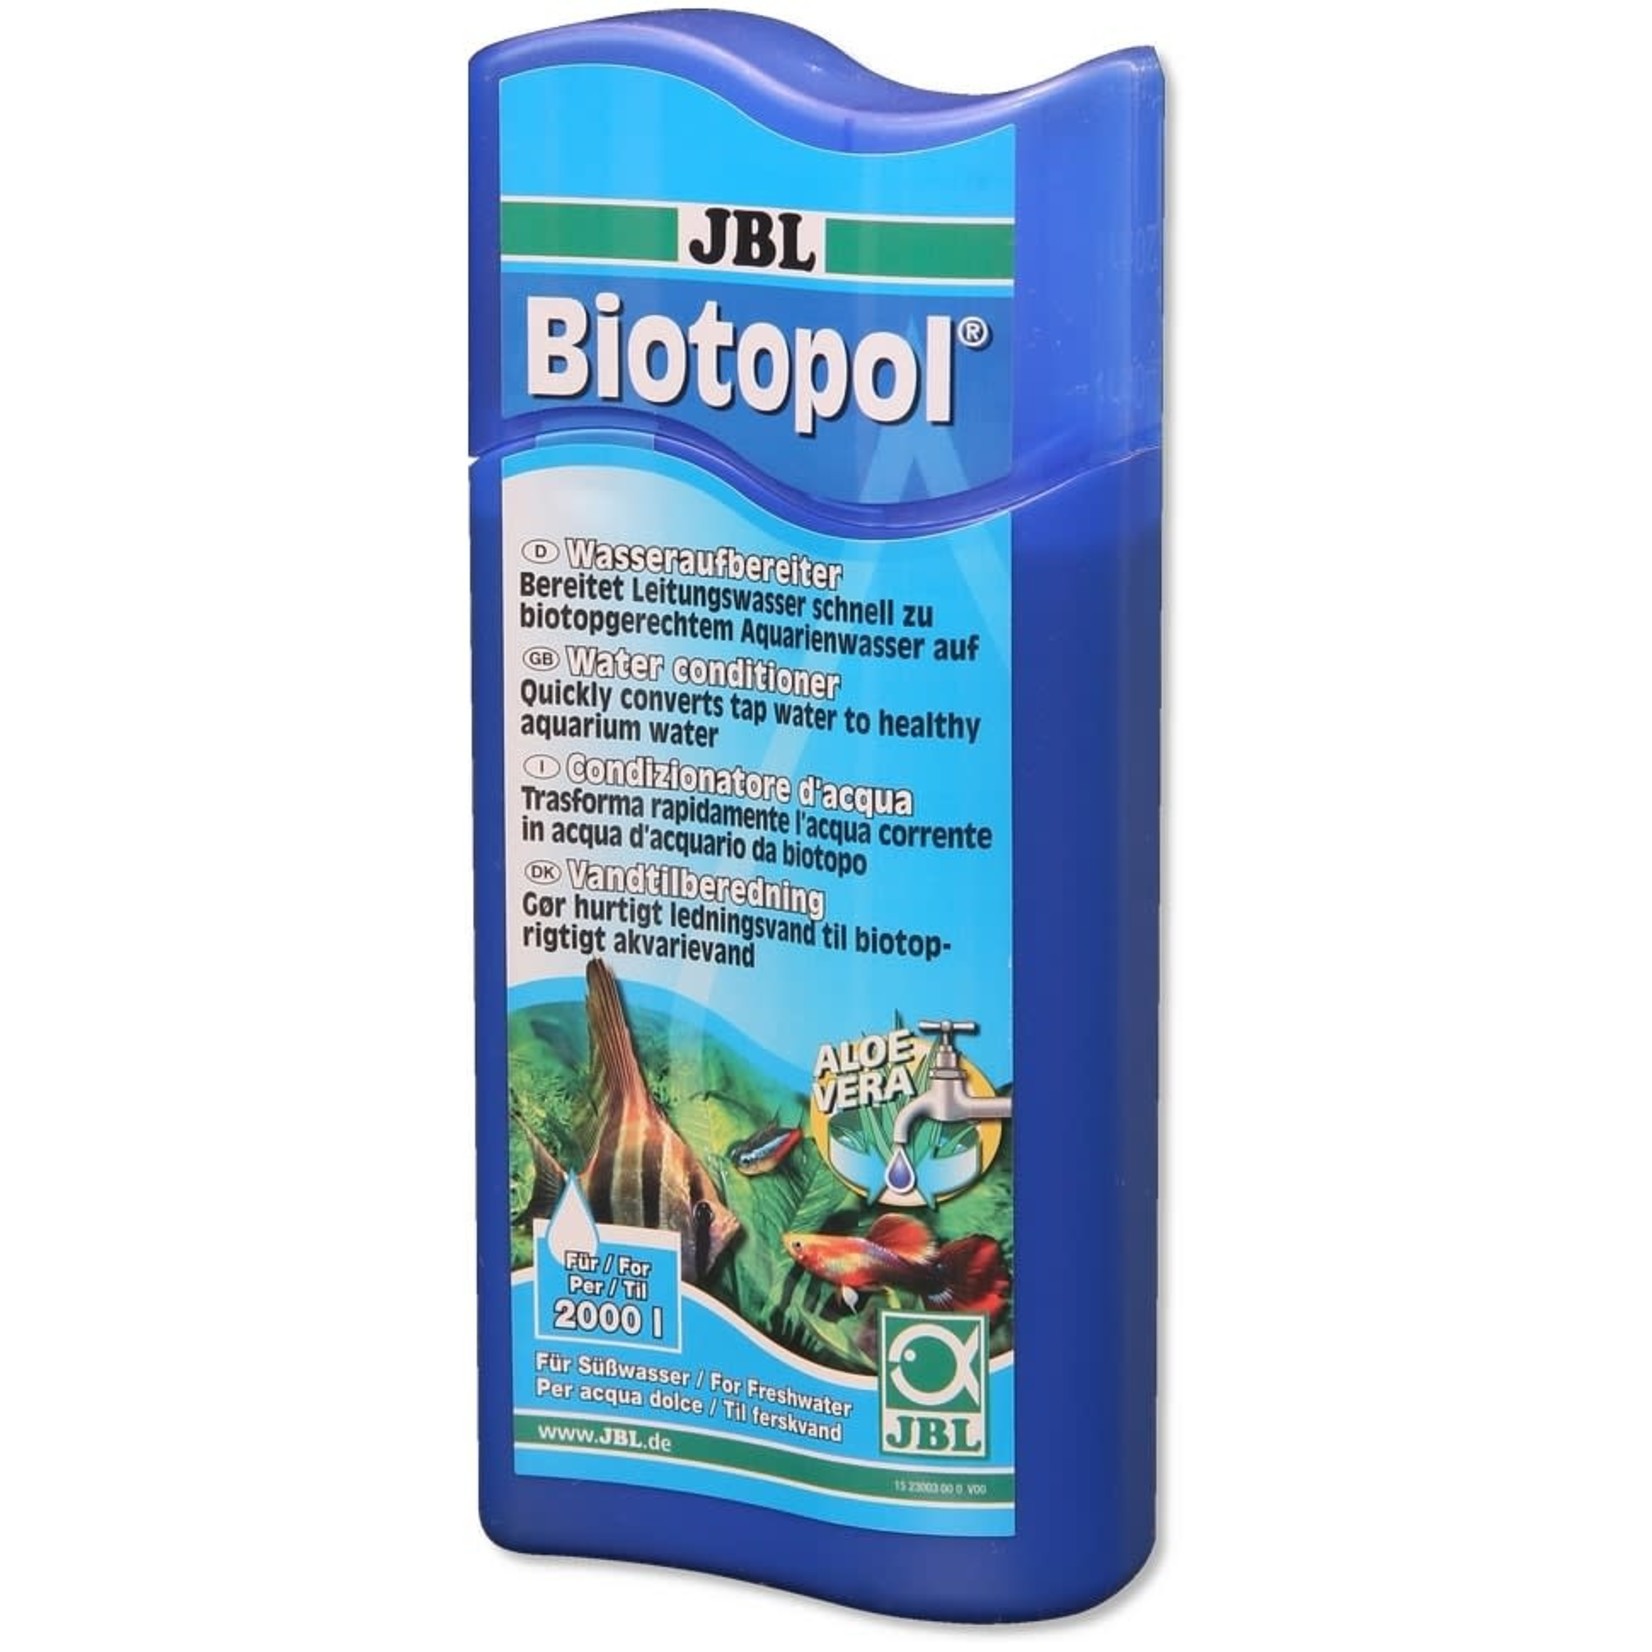 JBL JBL Biotopol Water Conditioner - 500ml